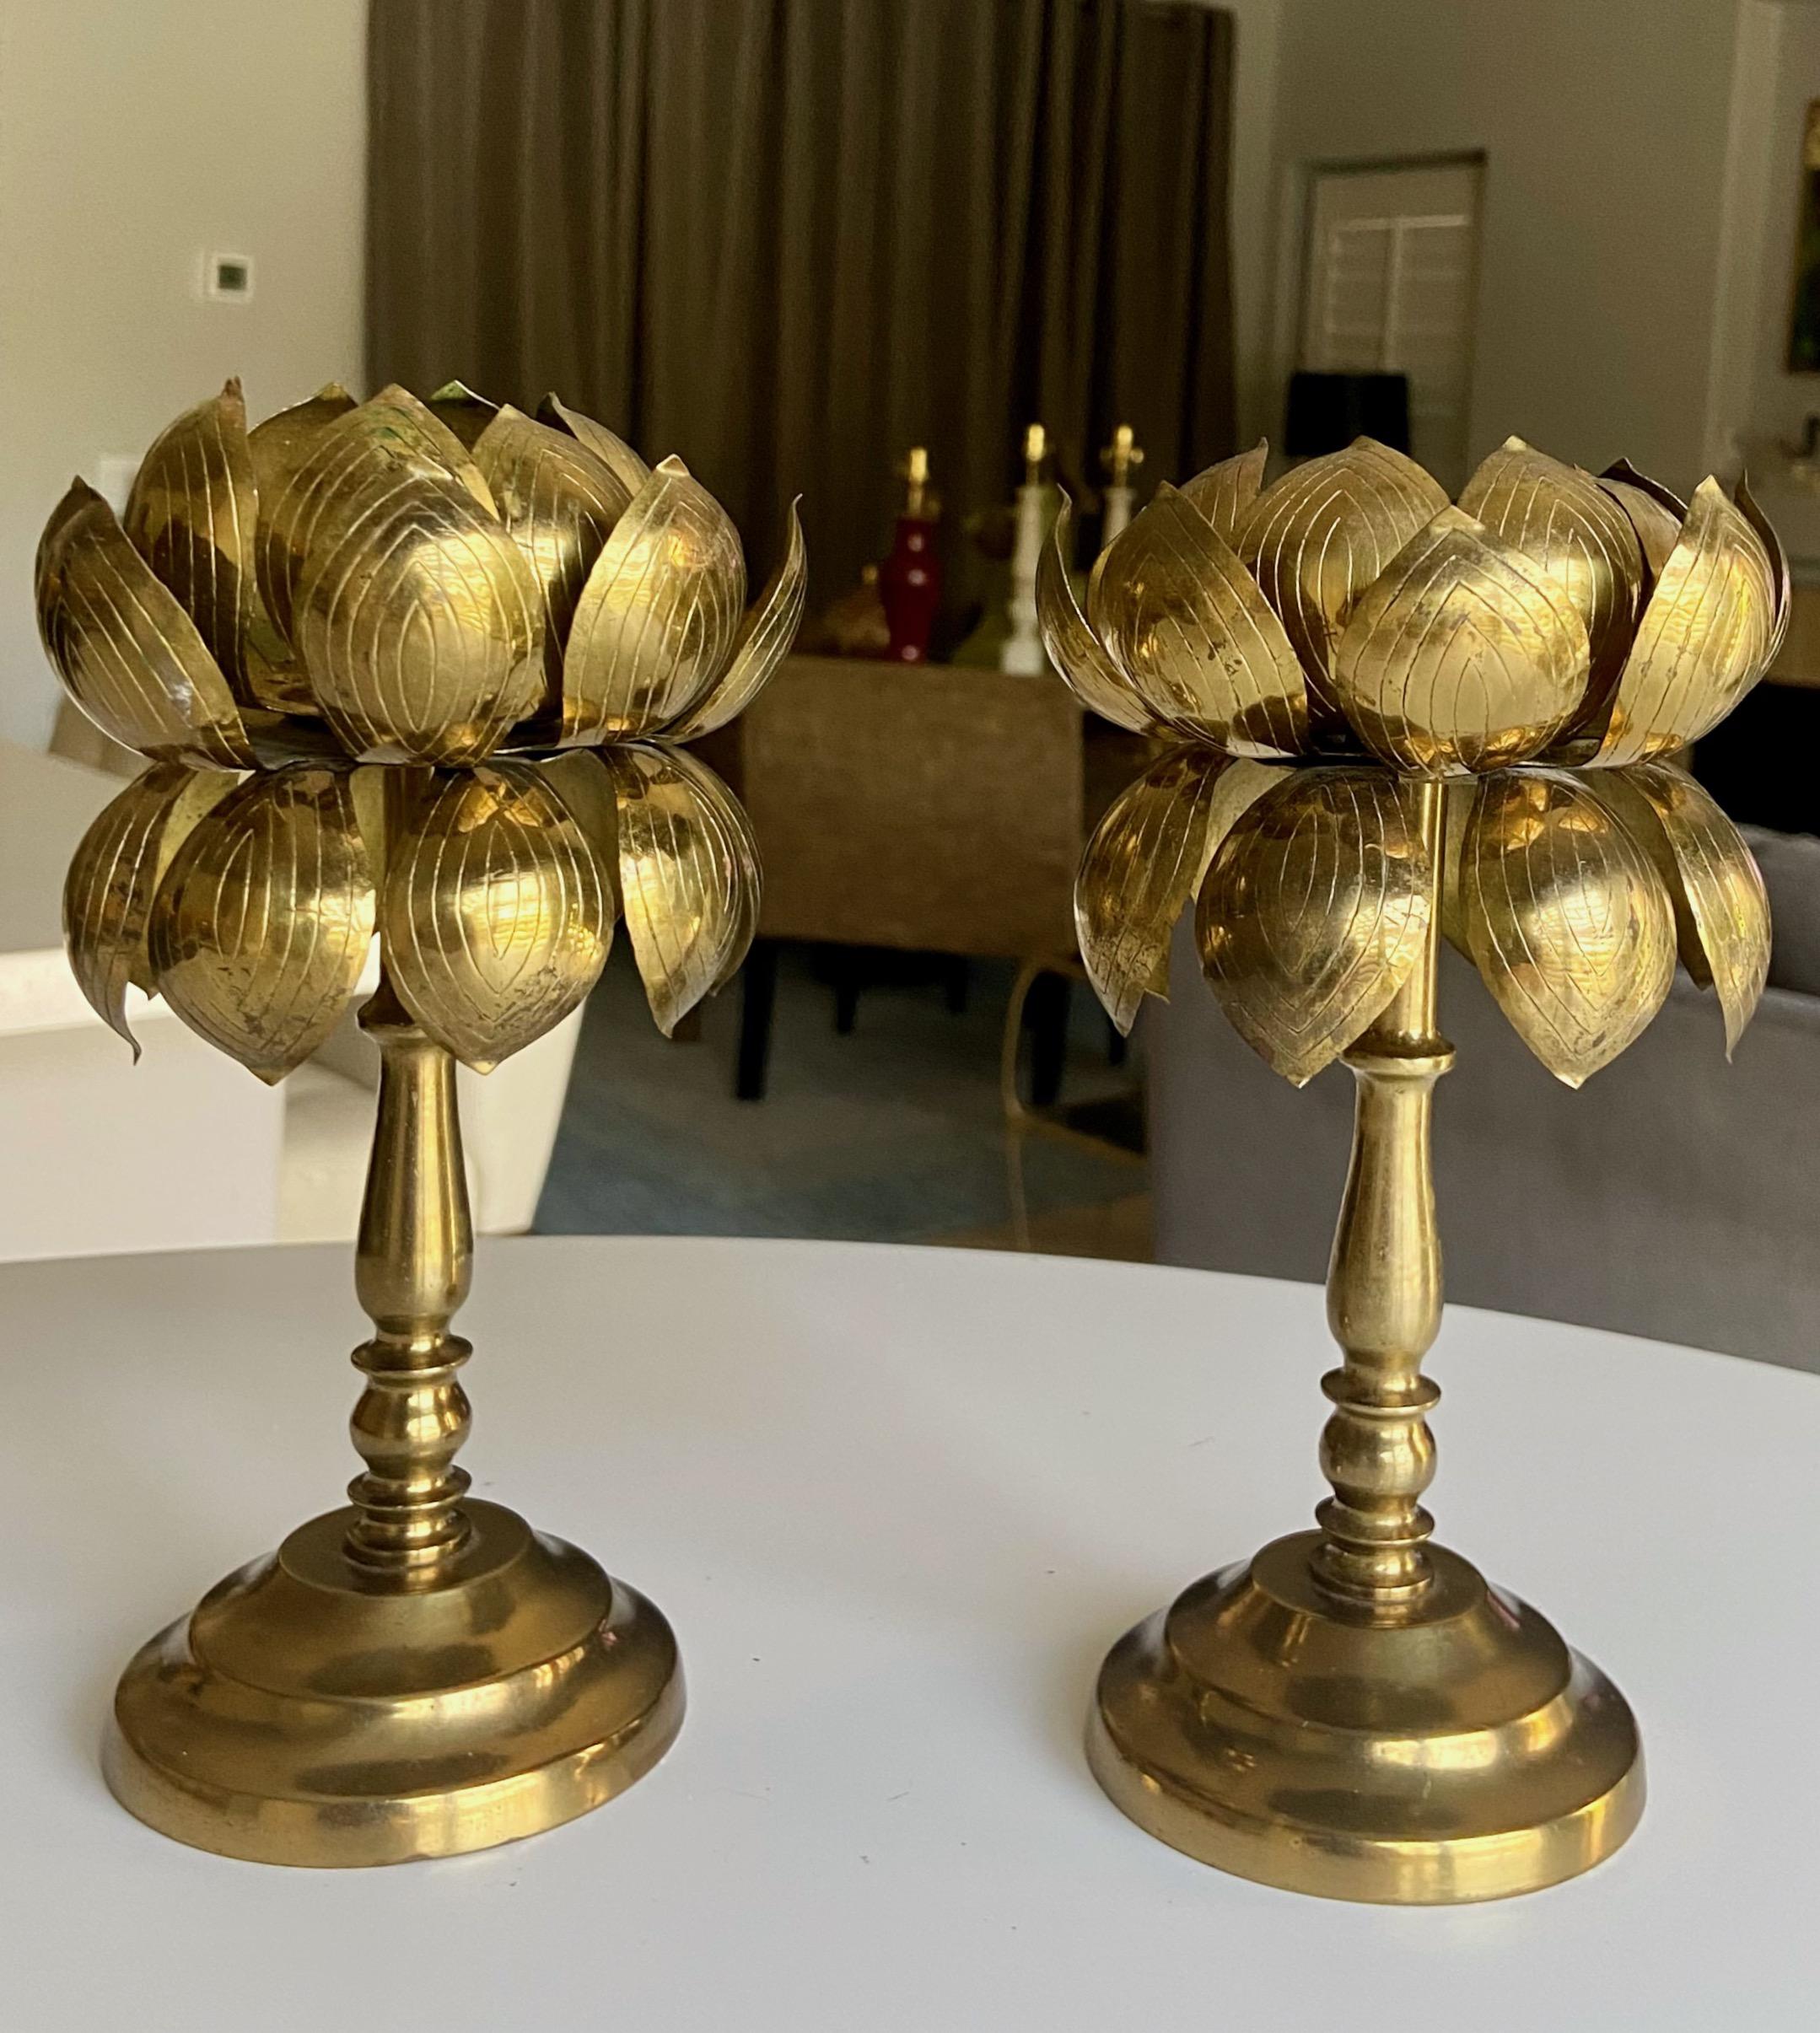 Pair of brass lotus flower candlesticks or candleholders by Feldman Lighting Company. Great condition retaining its original golden brass finish.